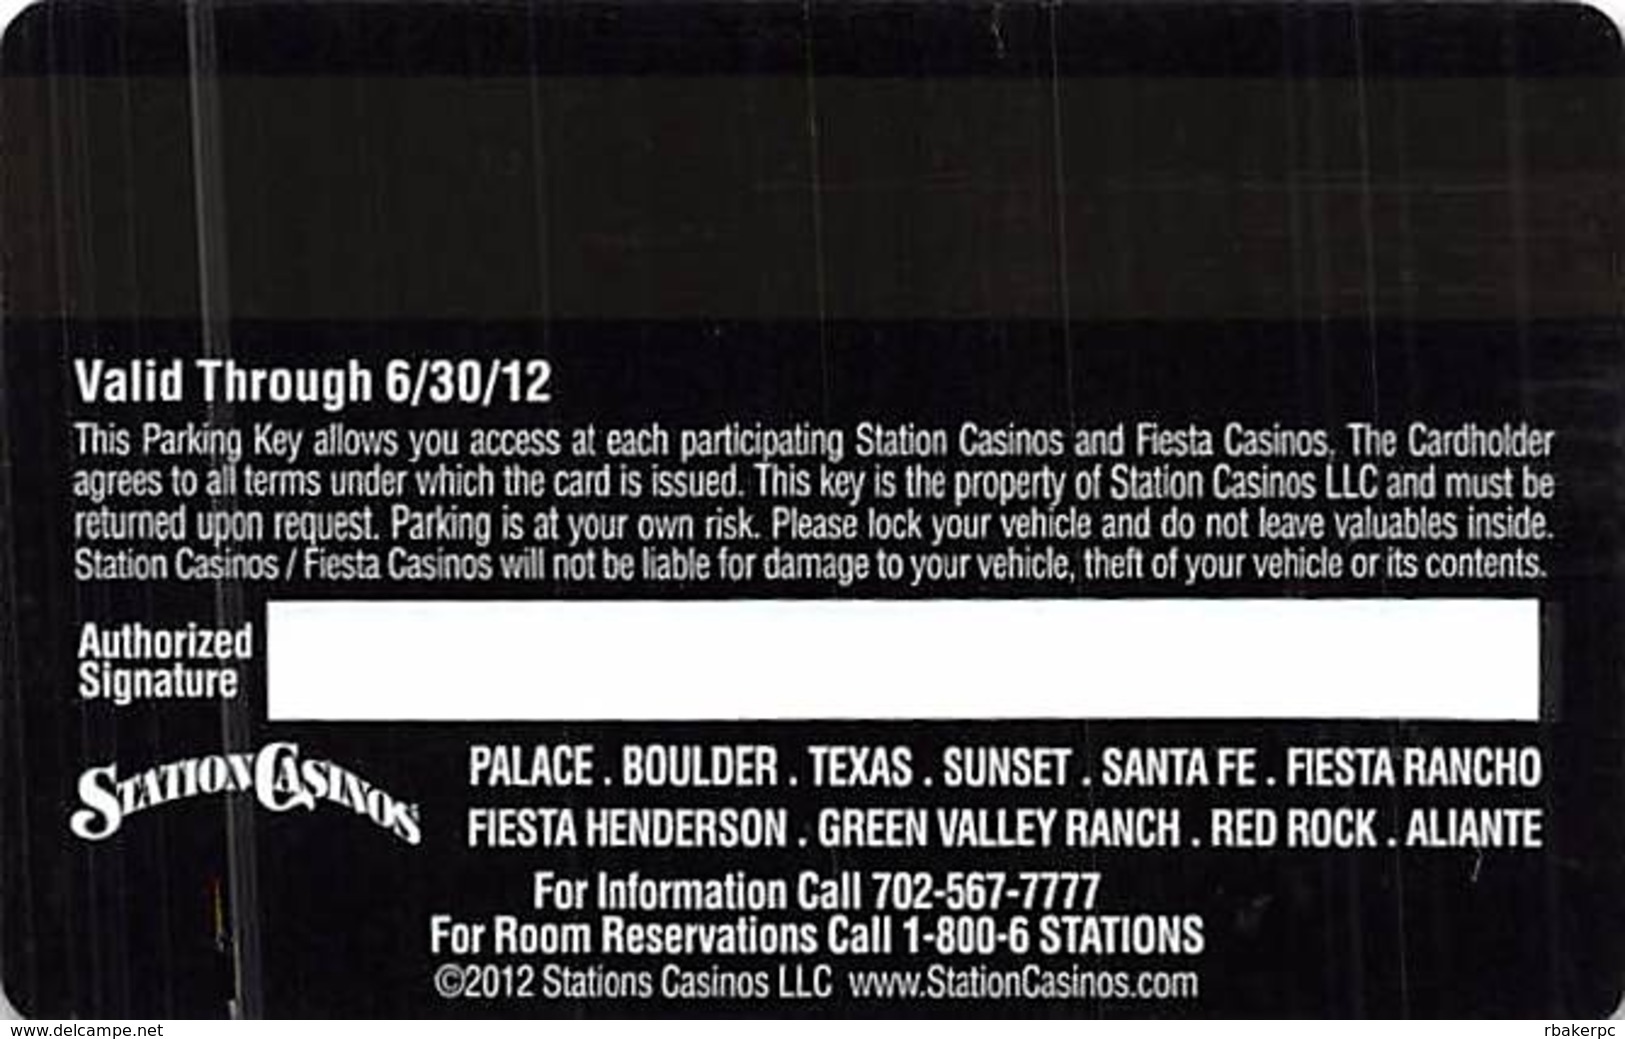 Station Casinos Las Vegas, NV - VIP Parking Card - Copyright 2012 - Exp 6/30/12 - Casino Cards